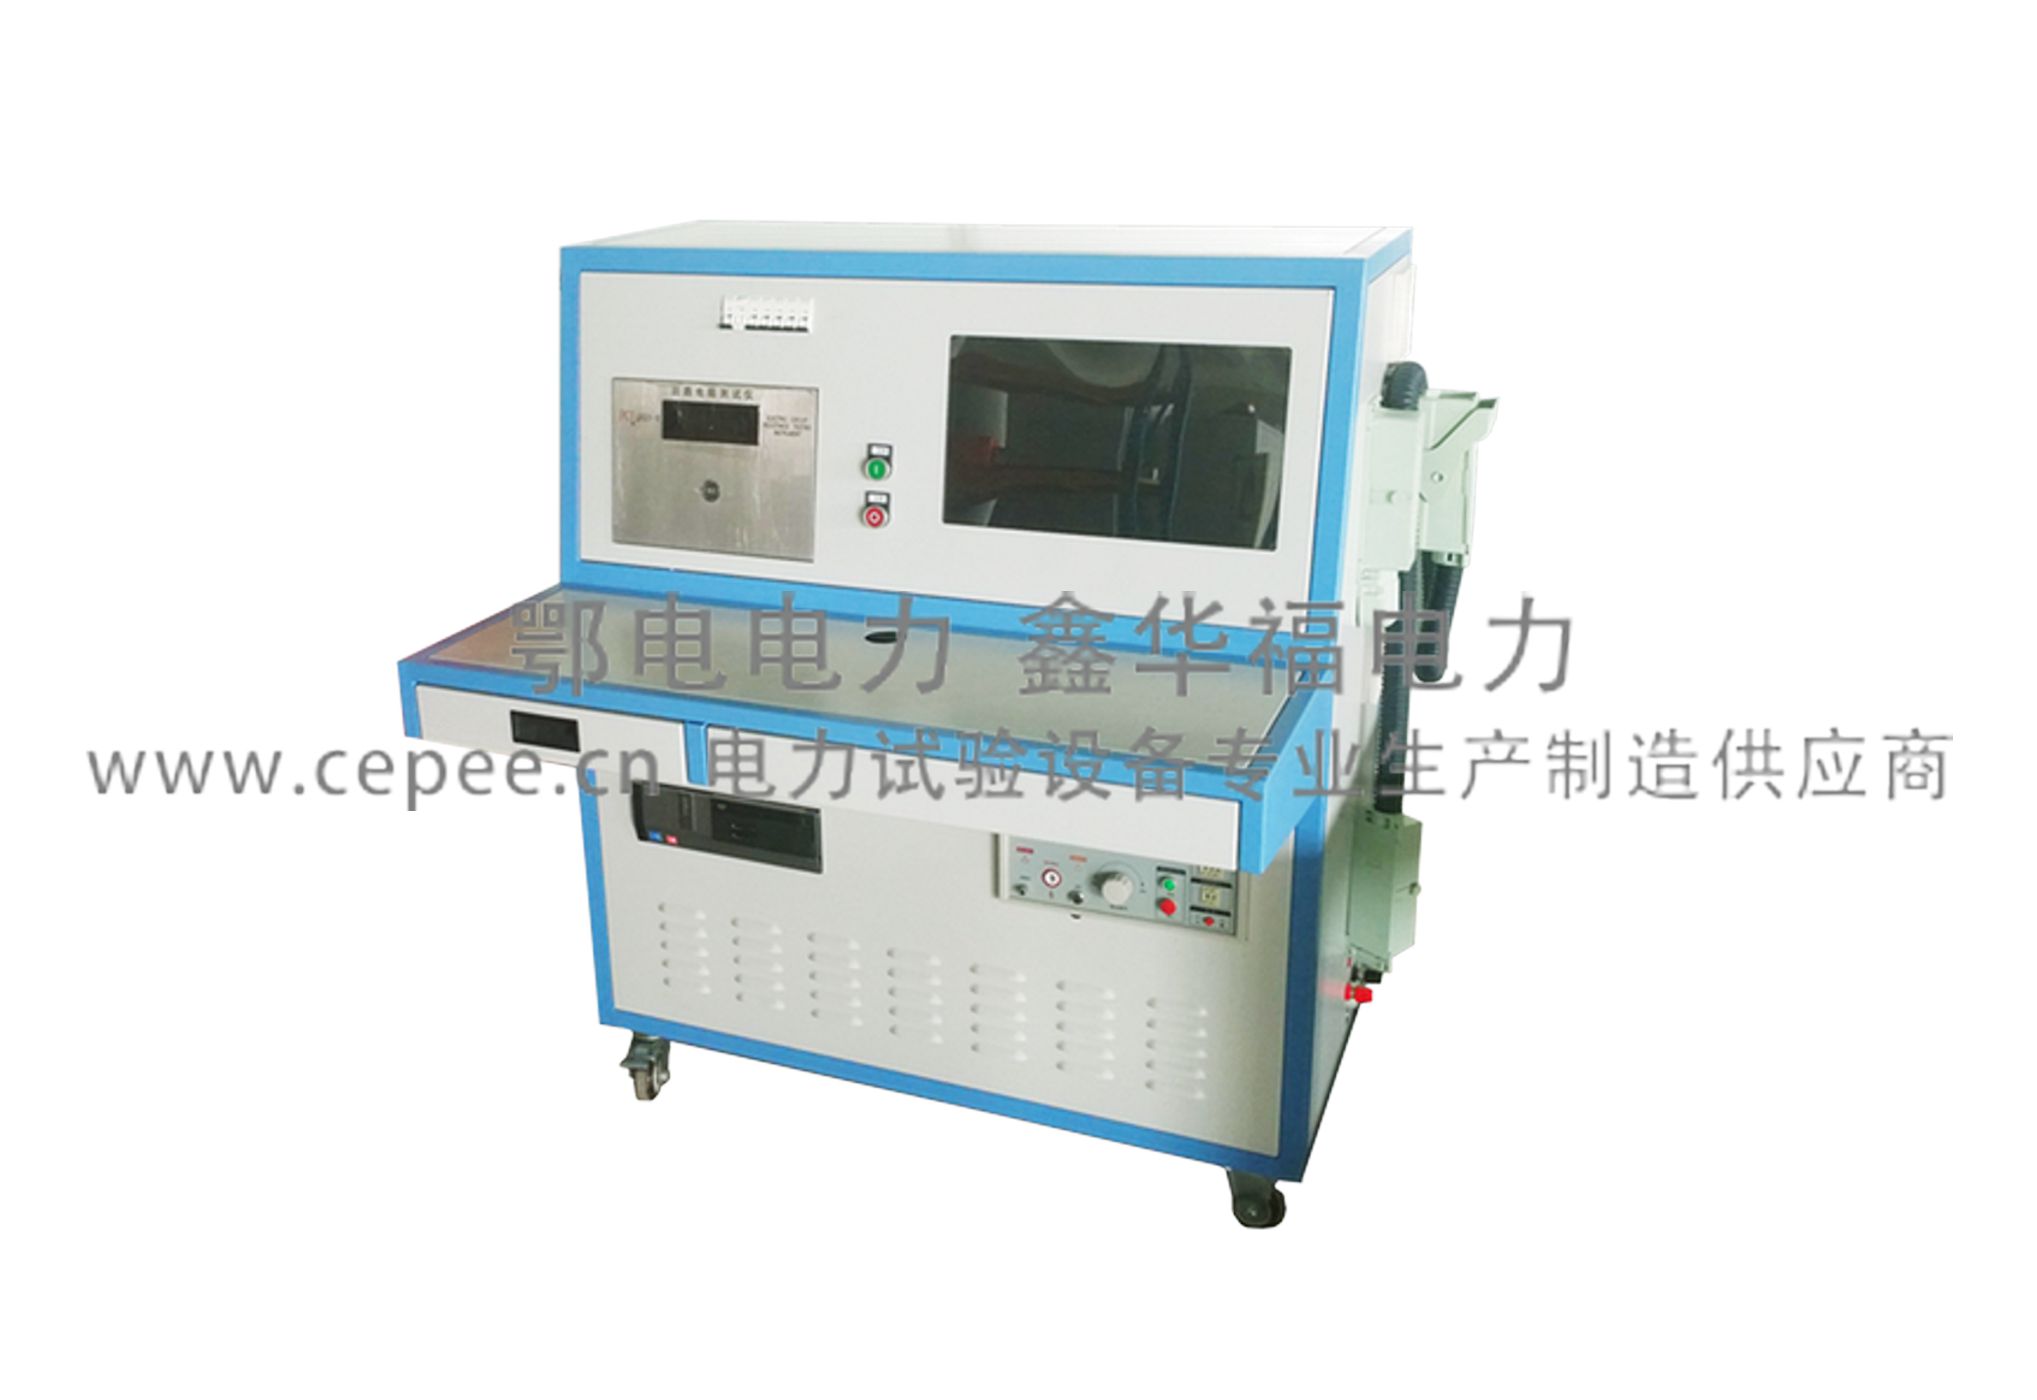 HDSP-502便携式SF6气体纯度分析仪_碳硫分析仪相关-武汉鄂电电力试验设备有限公司